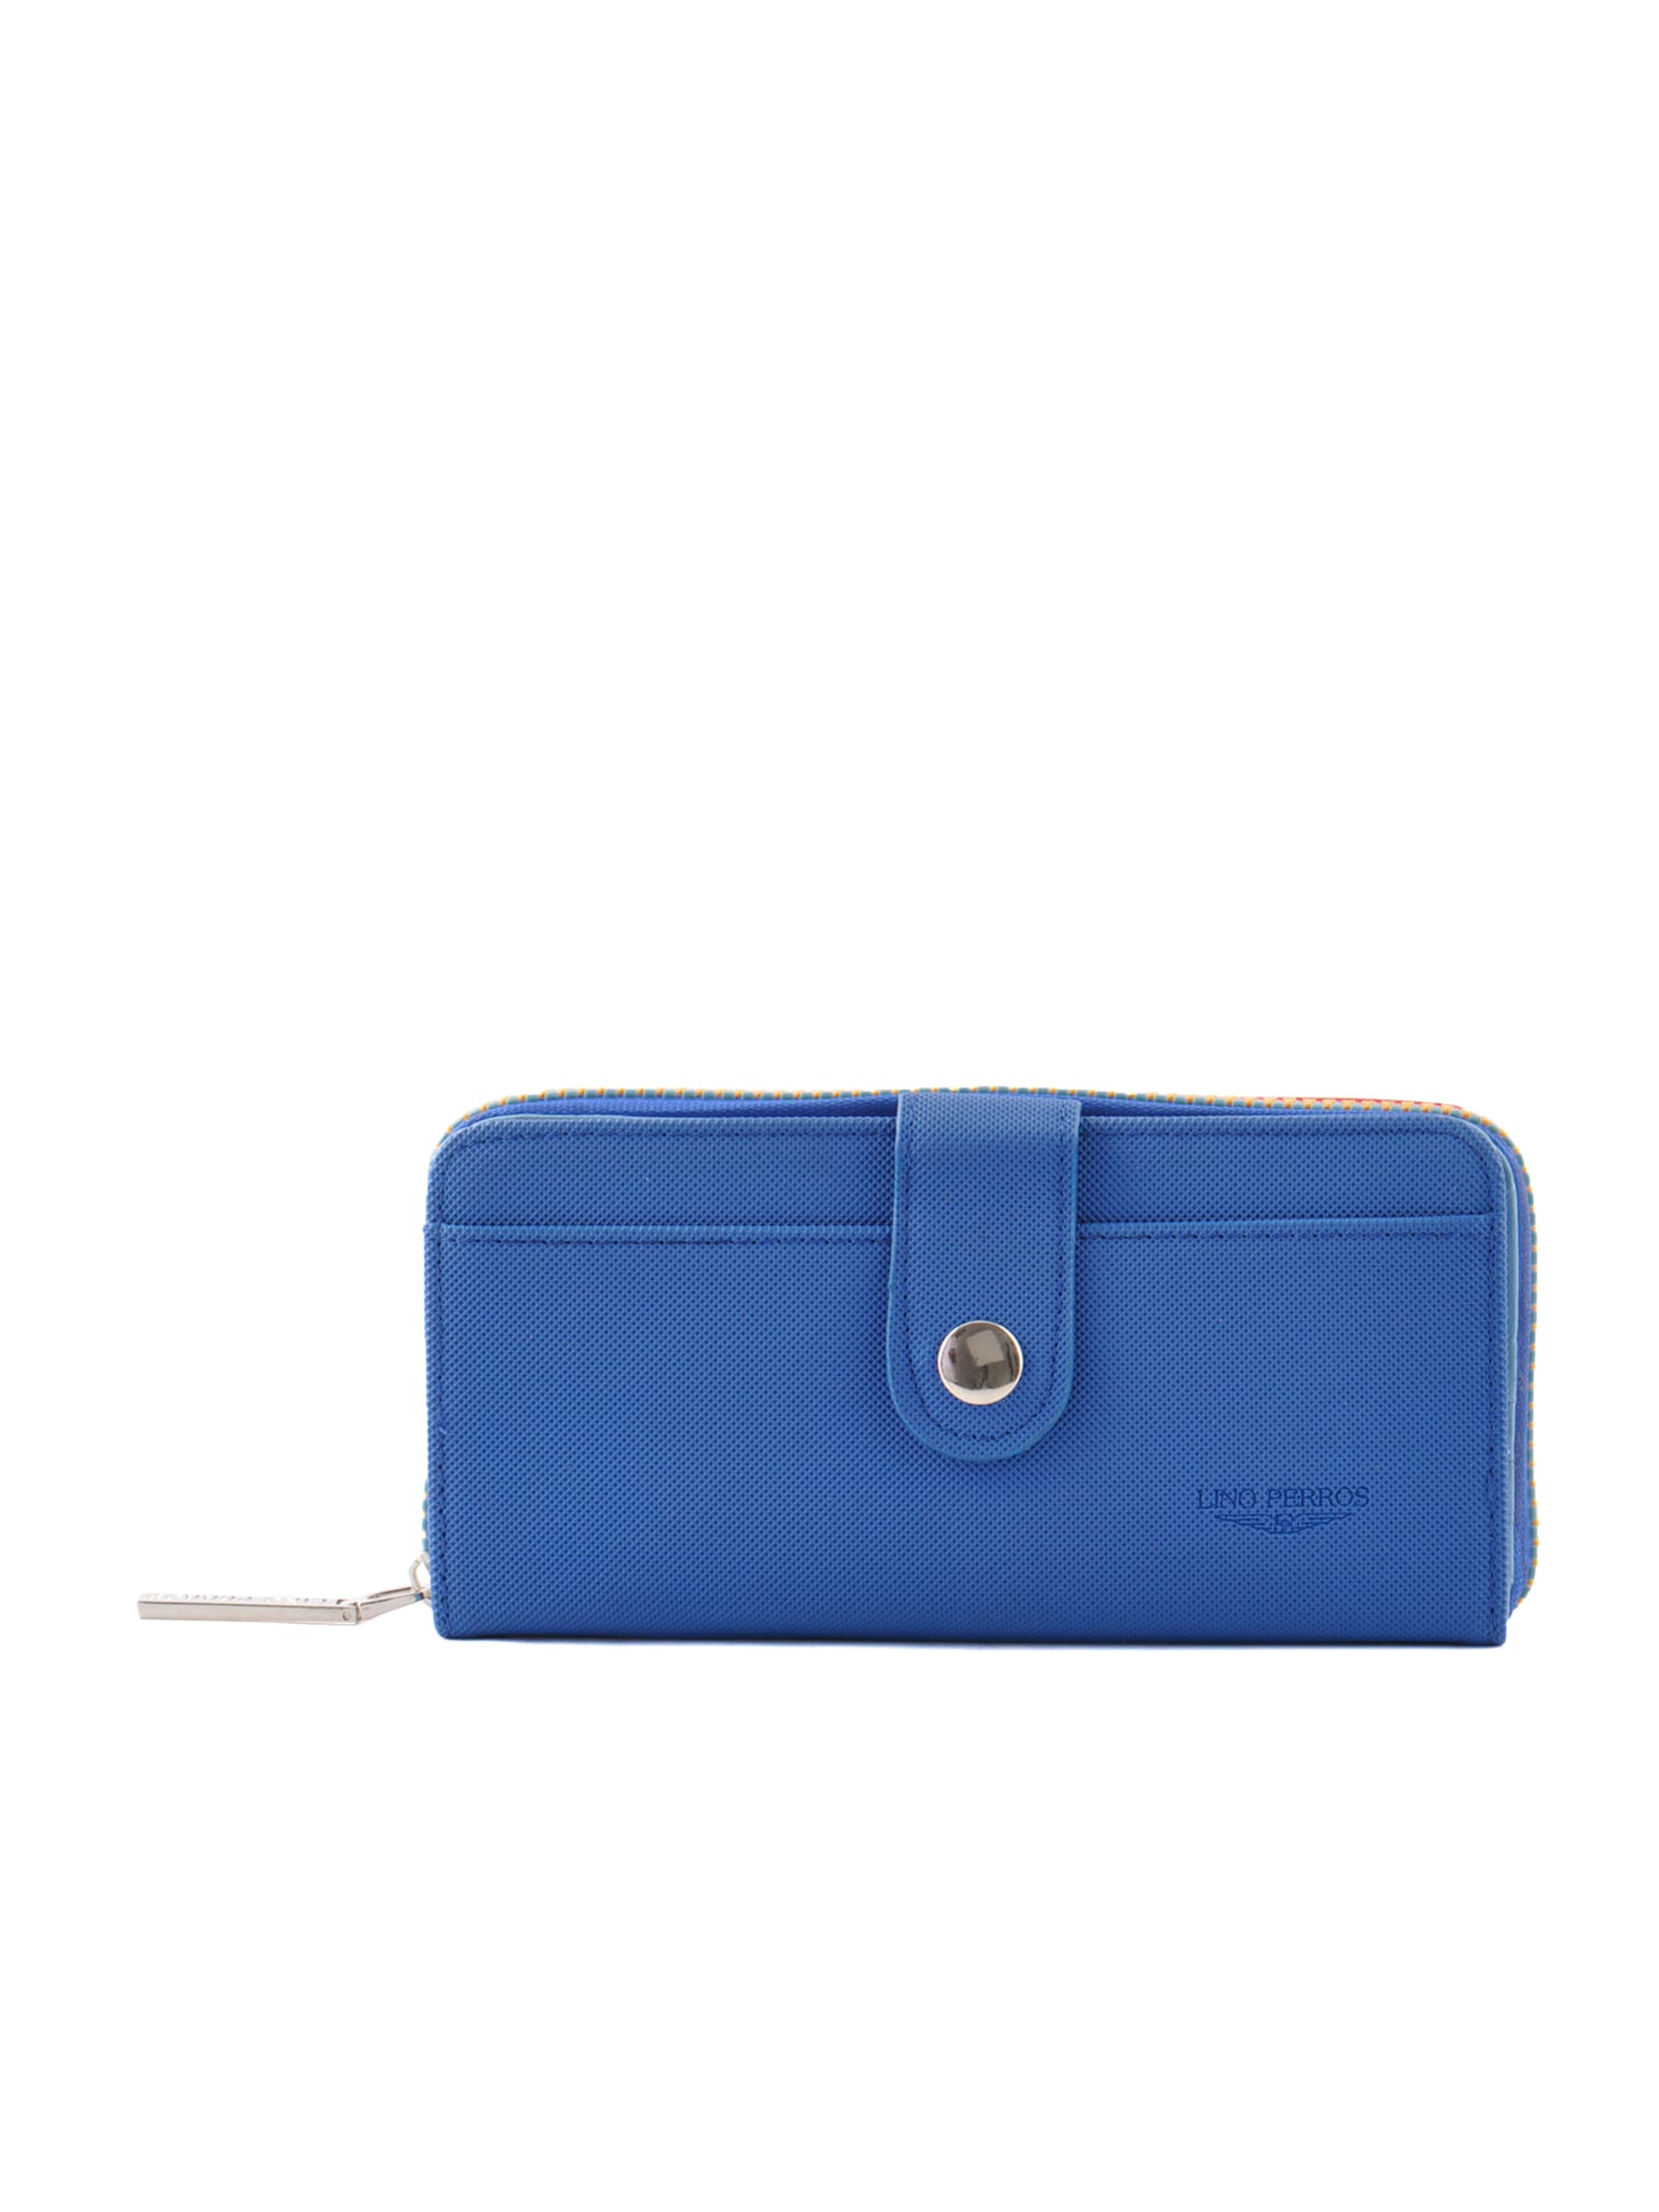 Lino Perros Women Blue Zip Blue Wallet